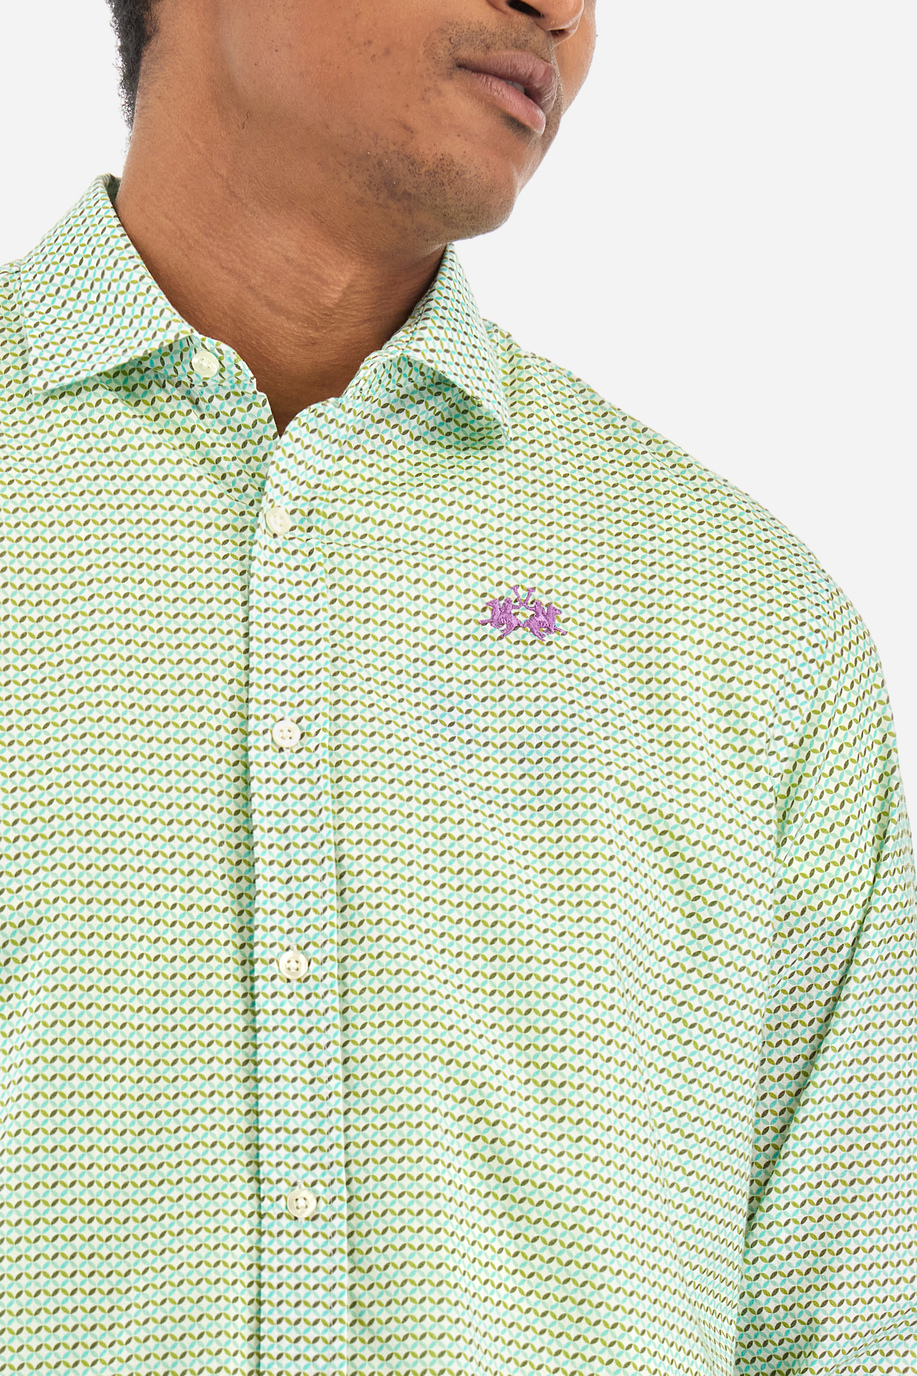 Geometric patterned cotton shirt - Innocent - Shirts | La Martina - Official Online Shop